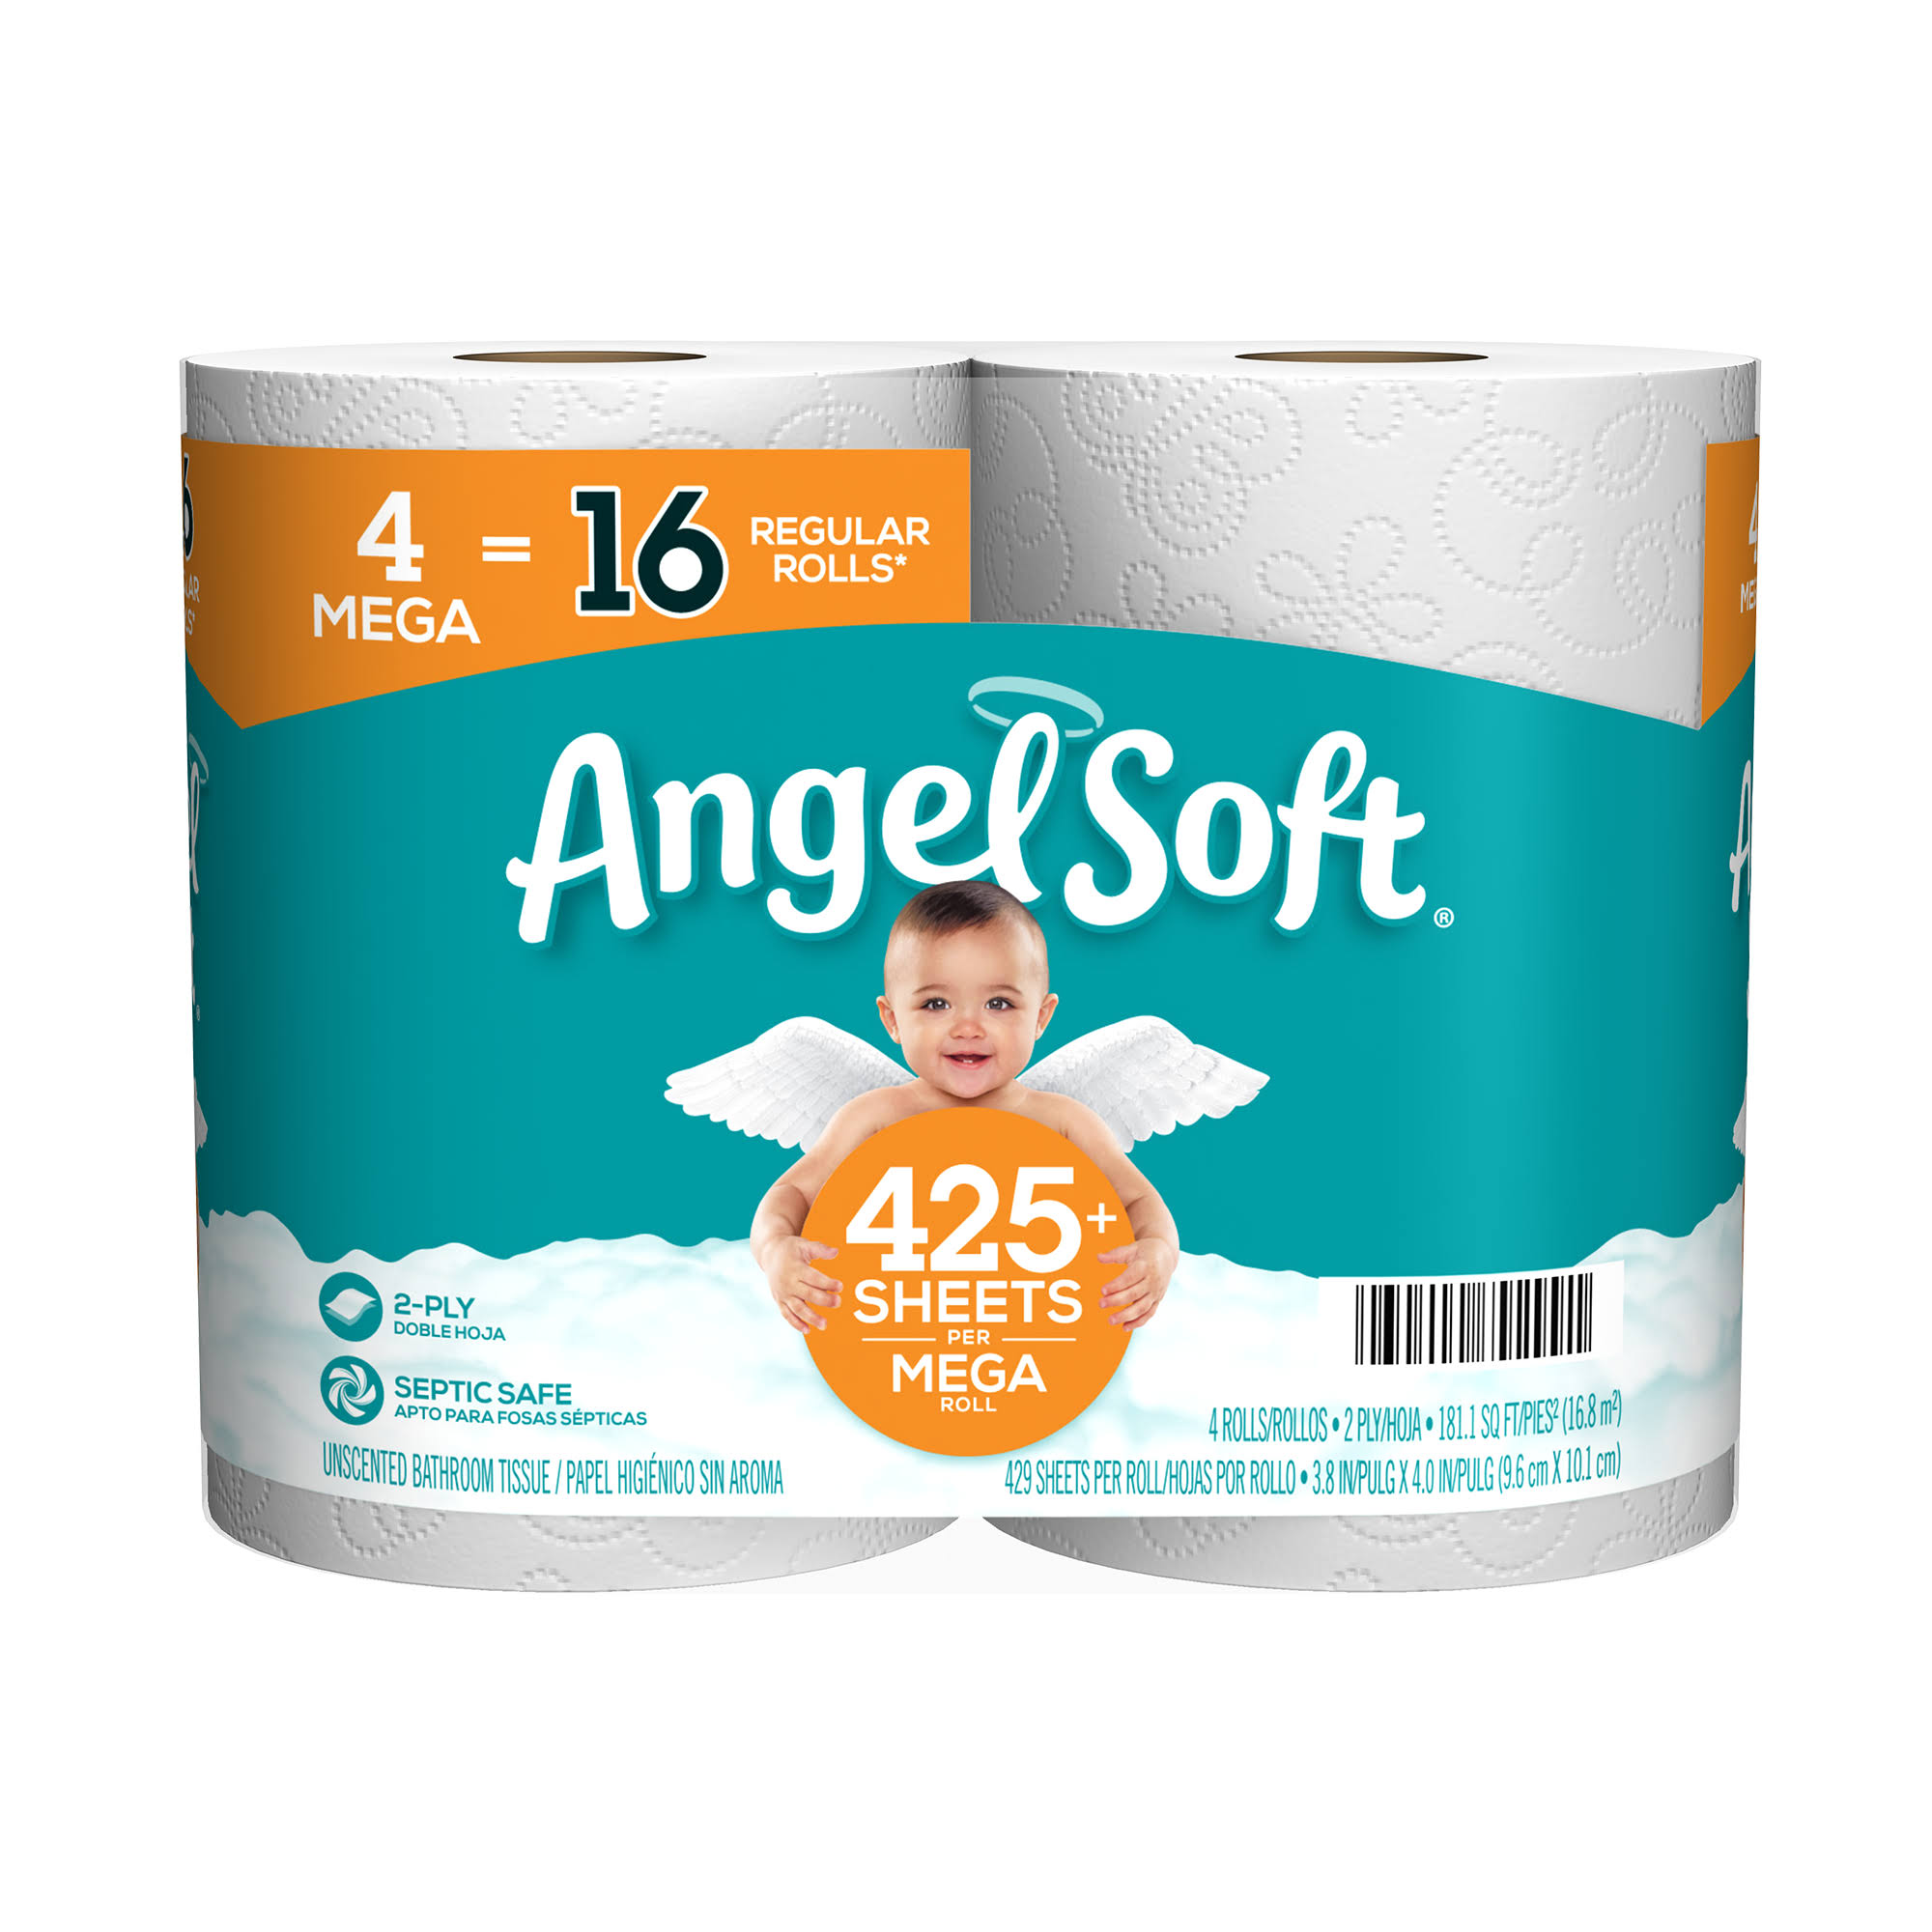 ANGEL SOFT Toilet Paper Bath Tissue, 4 Mega Rolls, 425+ 2-Ply Sheets